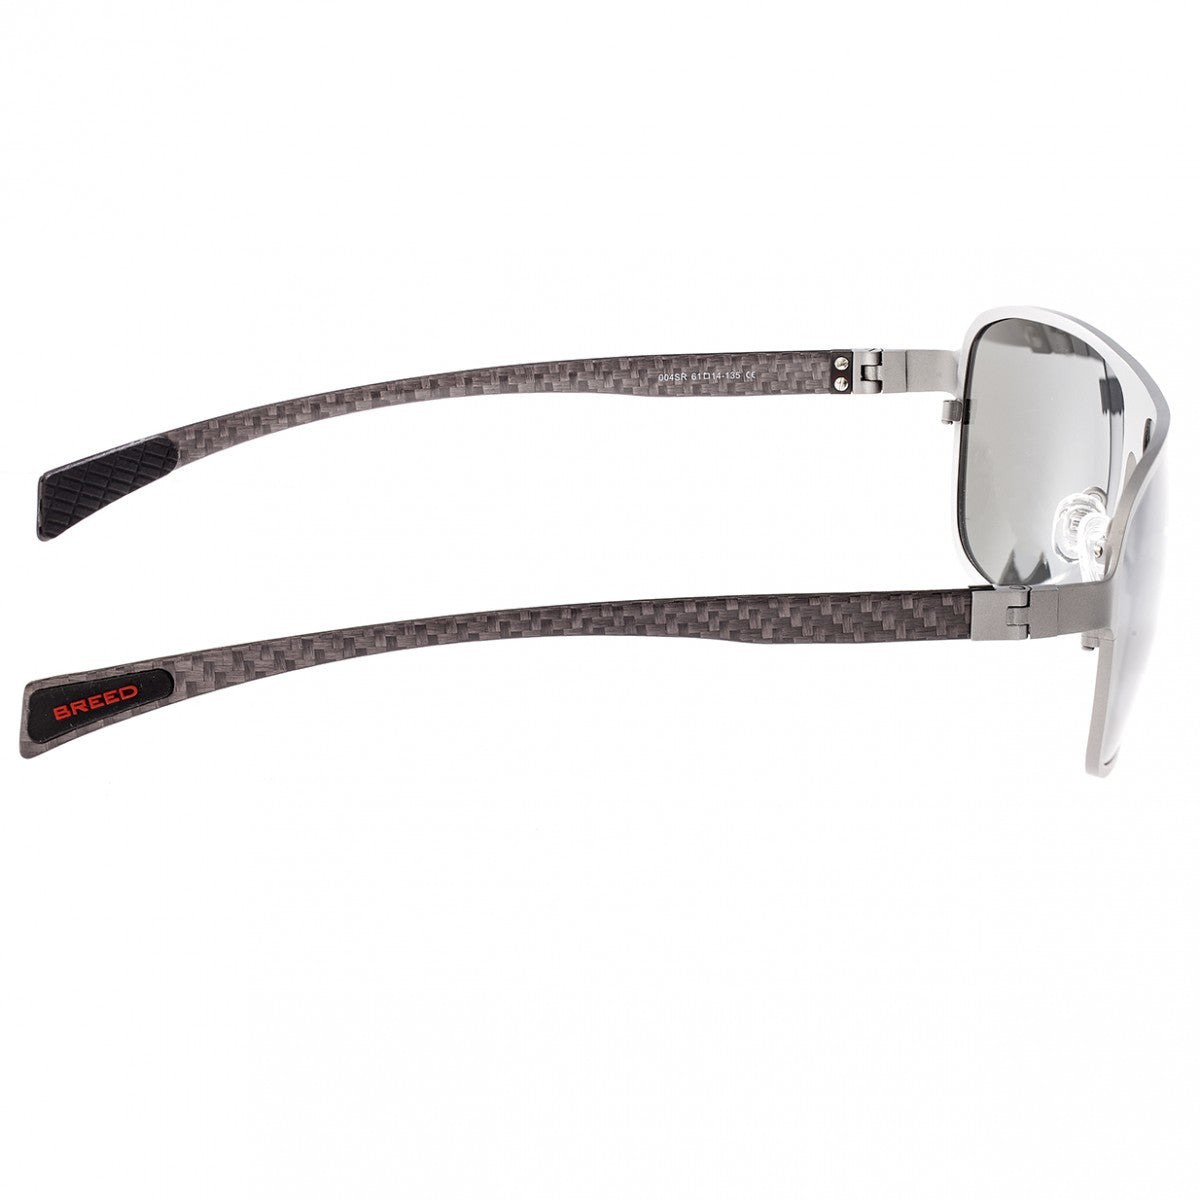 Breed Atmosphere Titanium and Carbon Fiber Polarized Sunglasses - Silver/Silver - BSG004SR